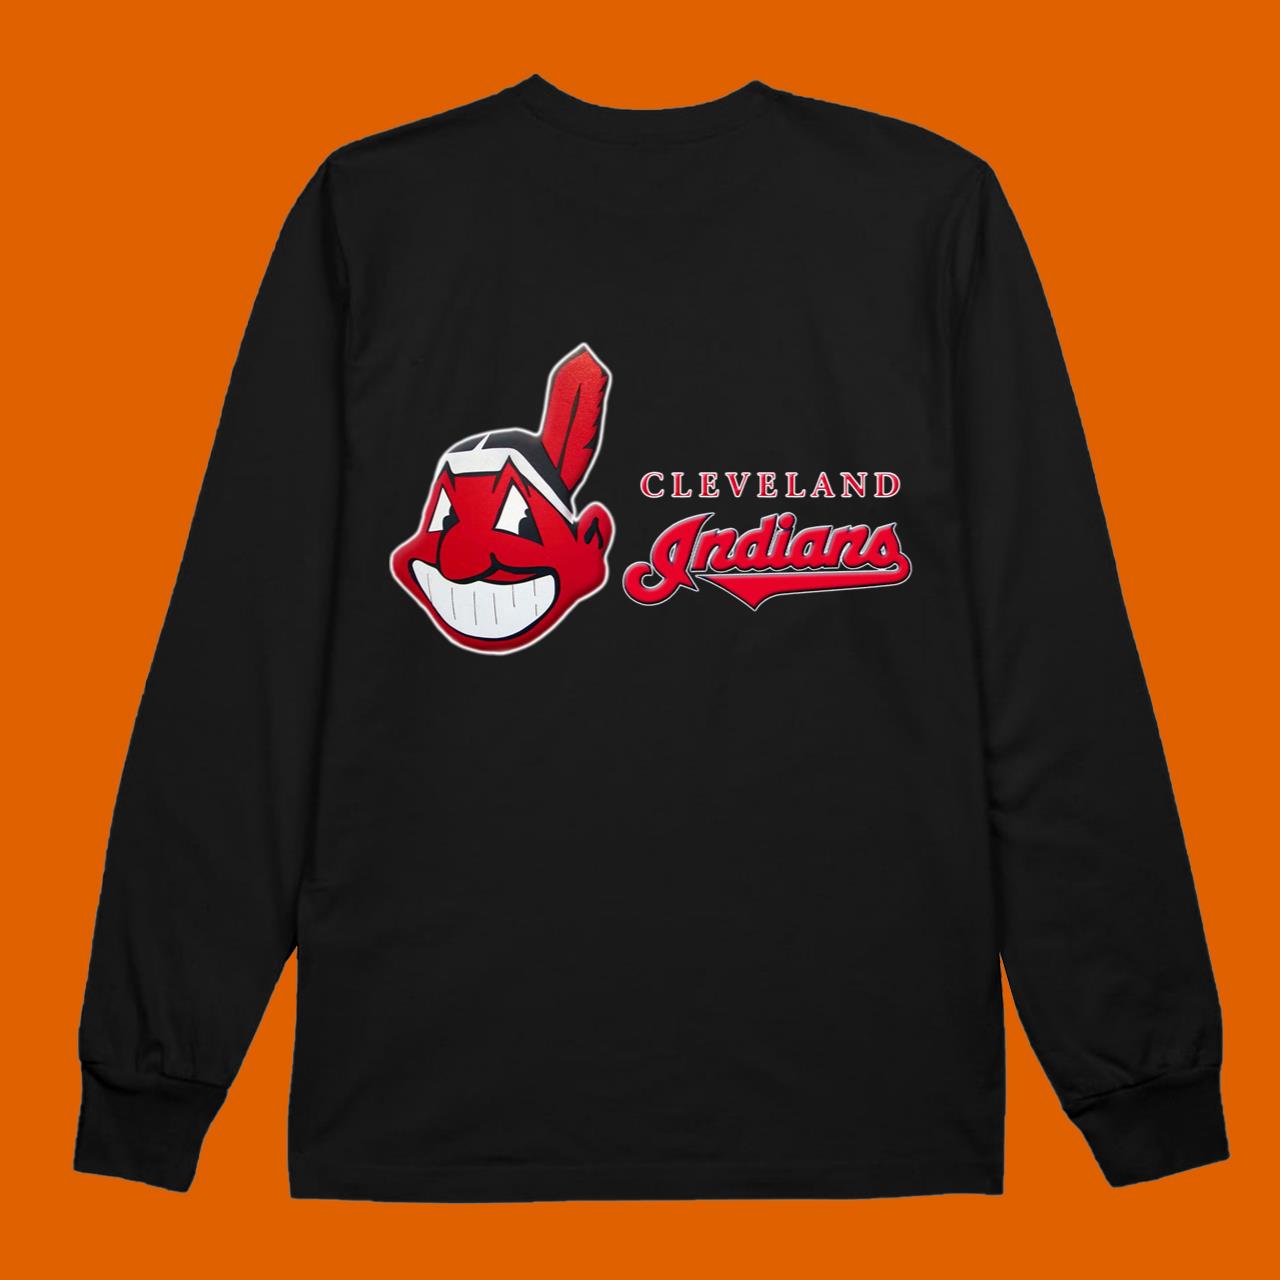 Funny Cleveland Indians Shirt